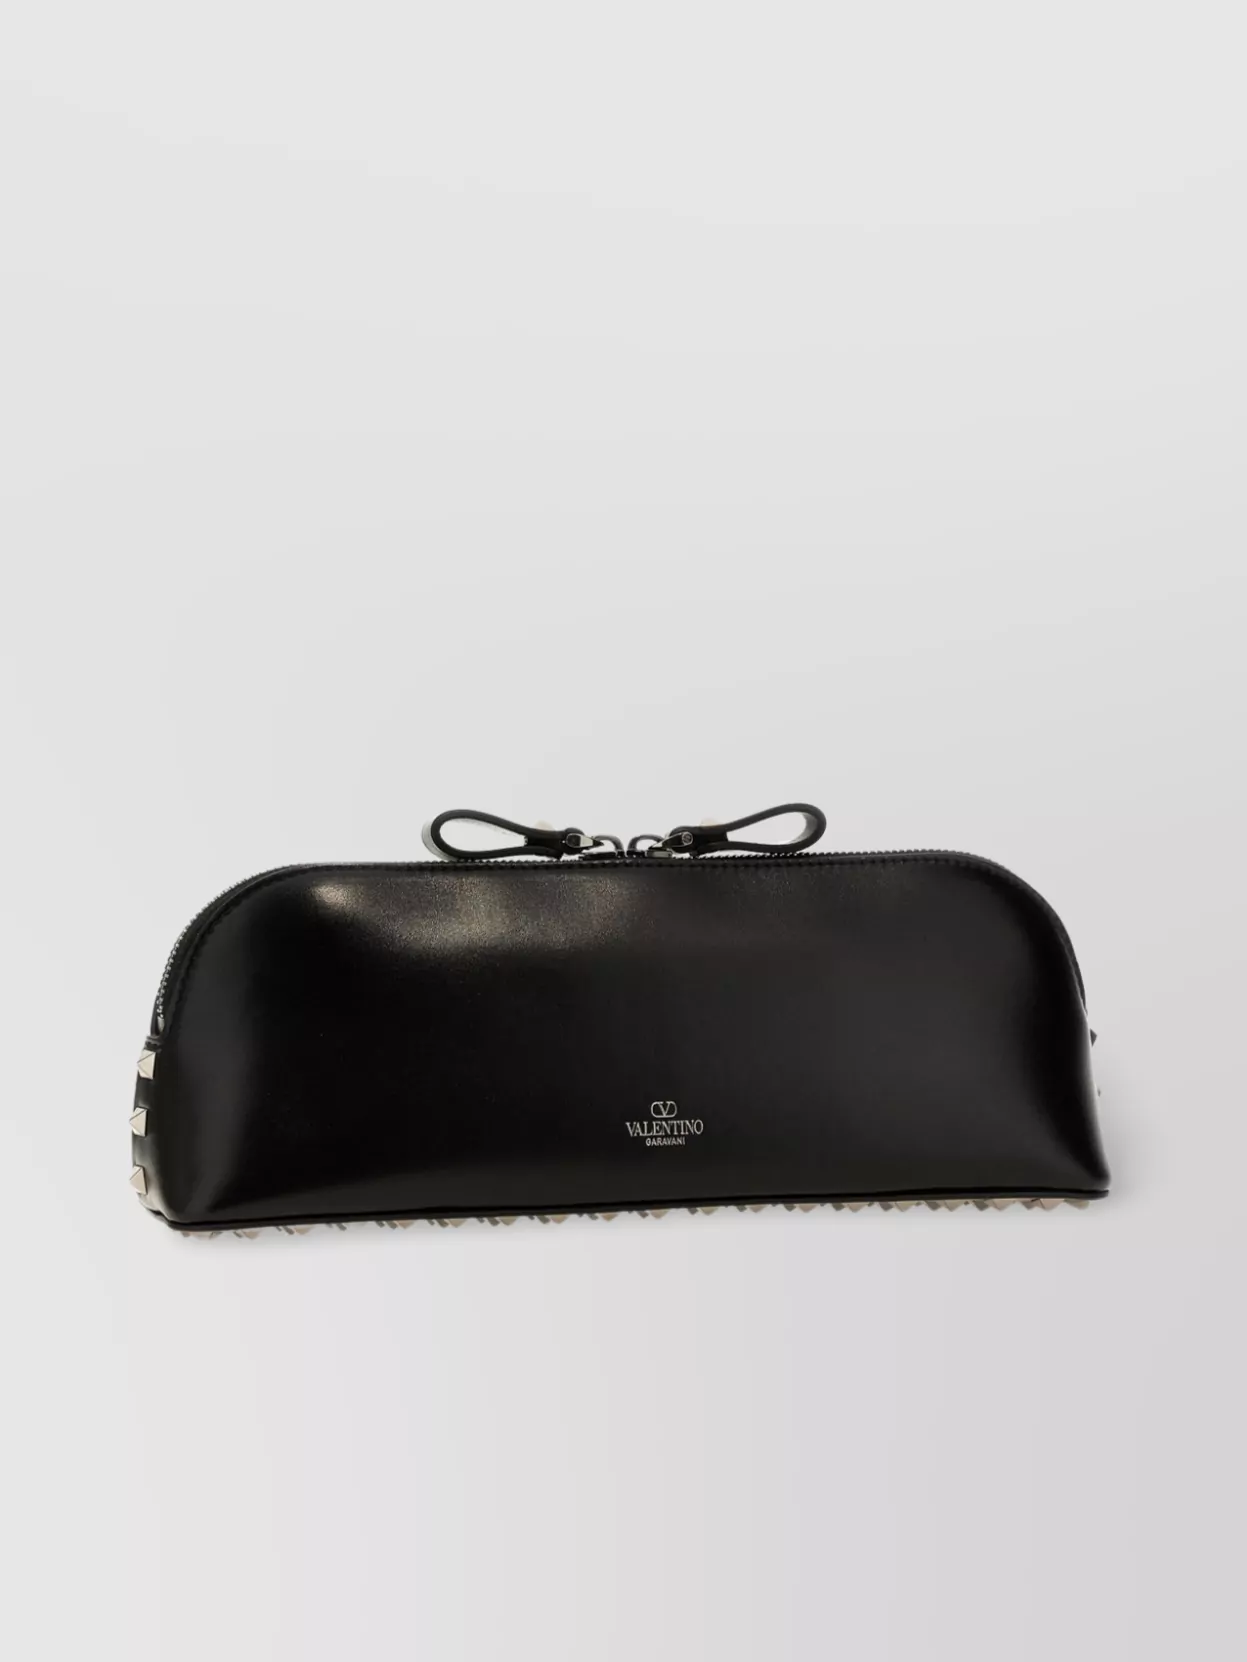 Valentino Garavani Rockstud Clutch Bag Adjustable Strap